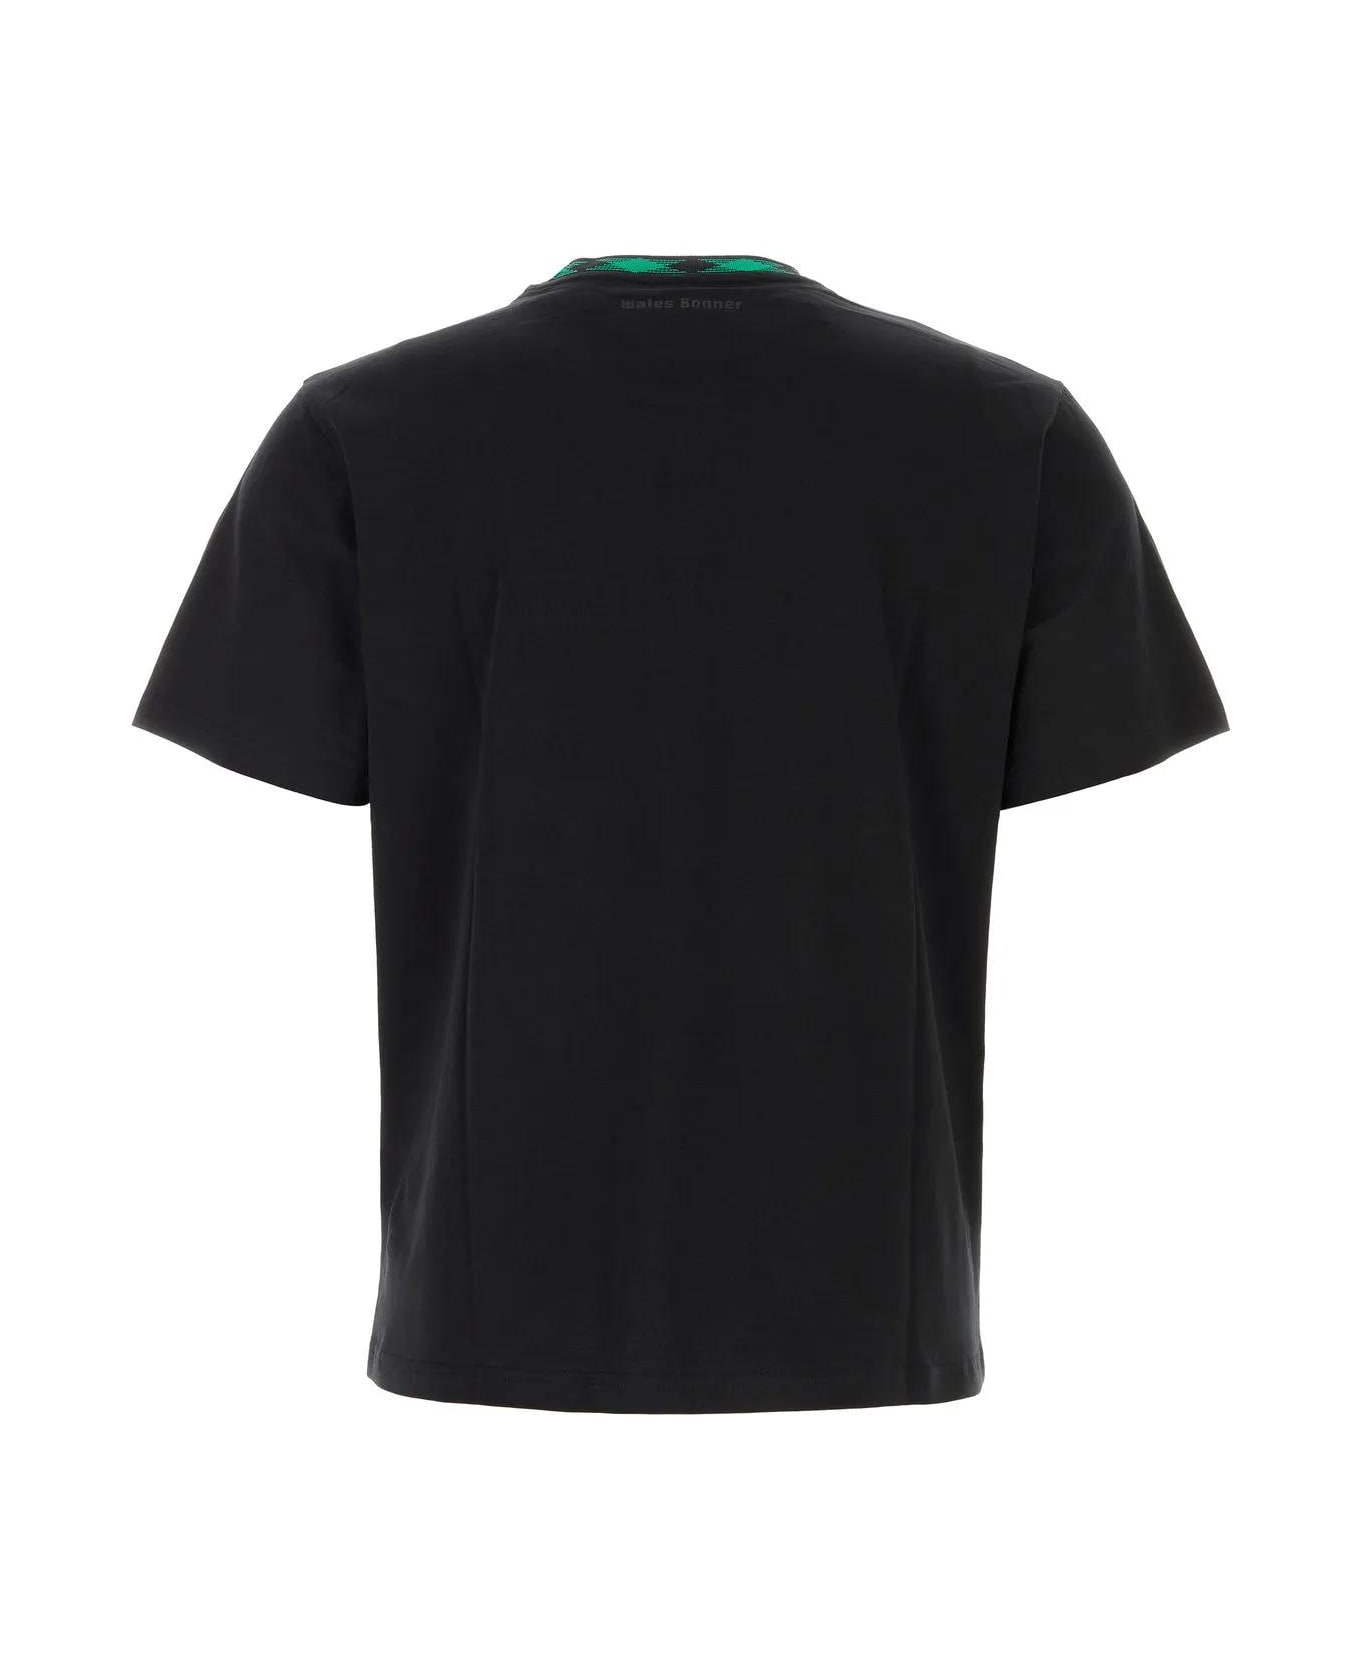 Wales Bonner Black Cotton Original T-shirt - Nero シャツ